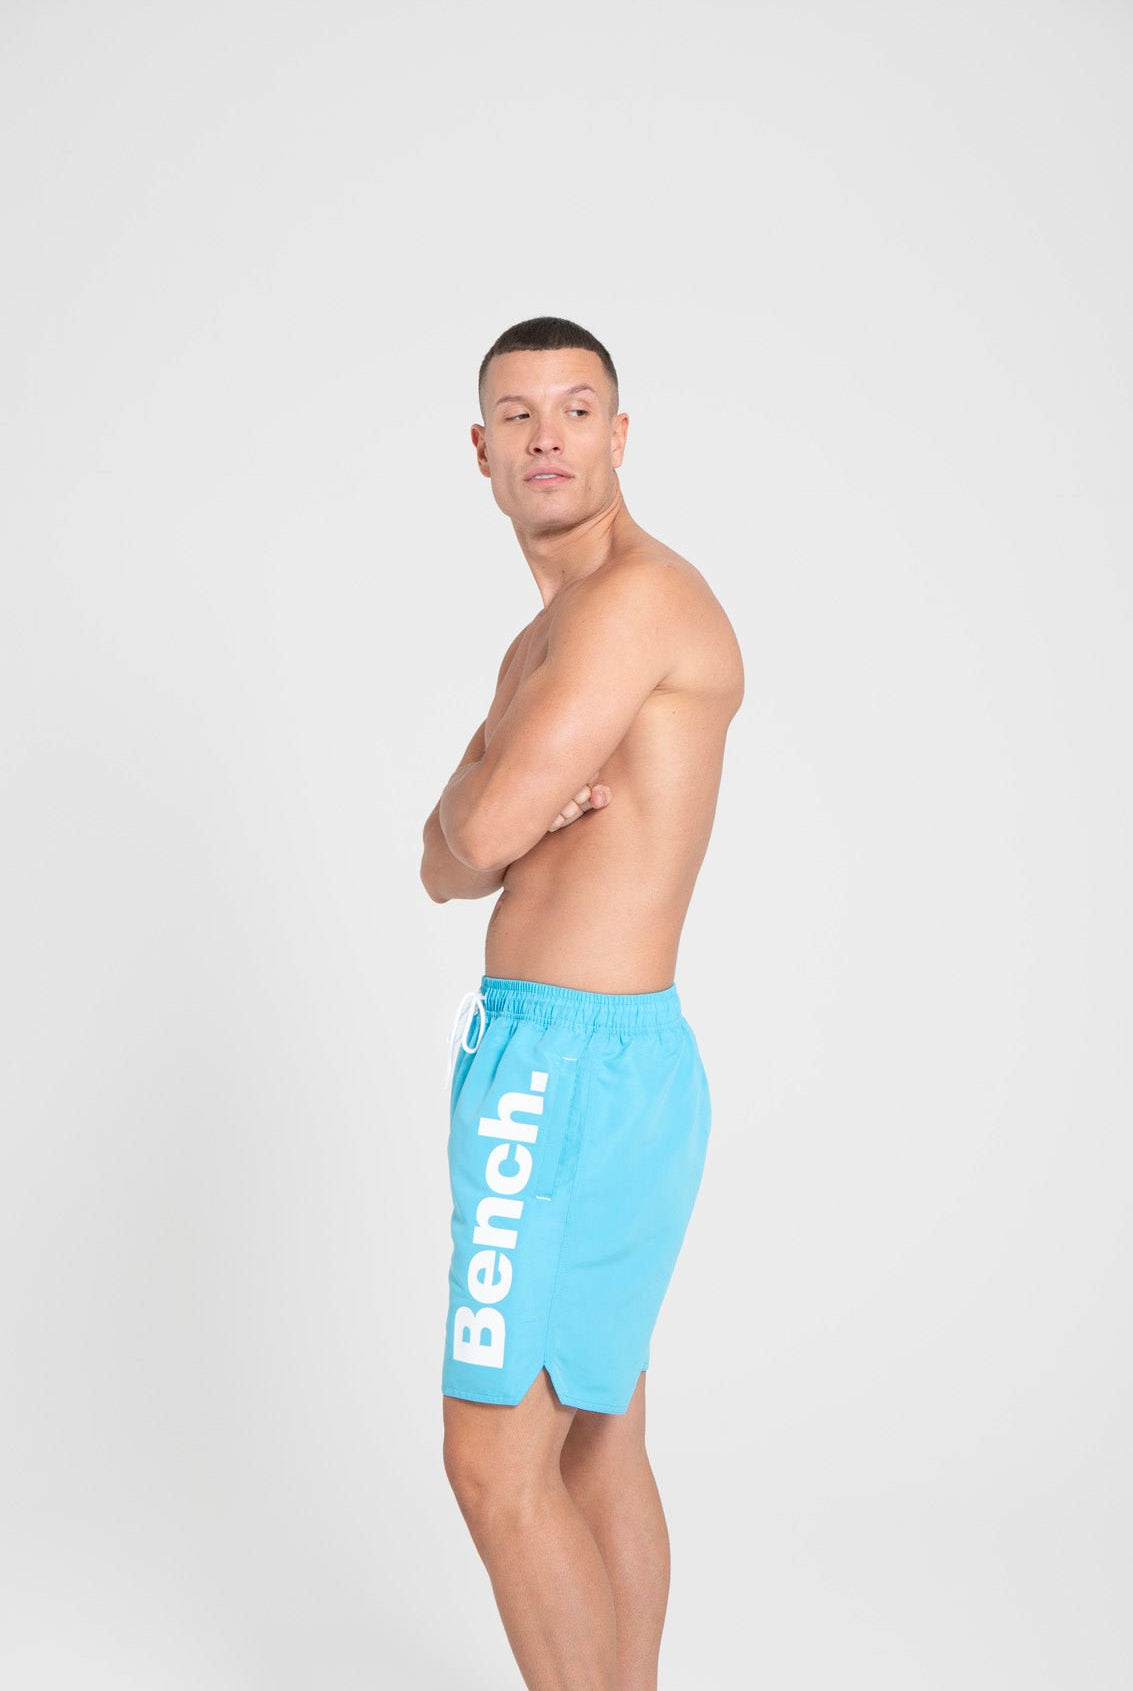 Mens 'TAHITI' Swim Shorts - BRIGHT BLUE - Shop at www.Bench.co.uk #LoveMyHood